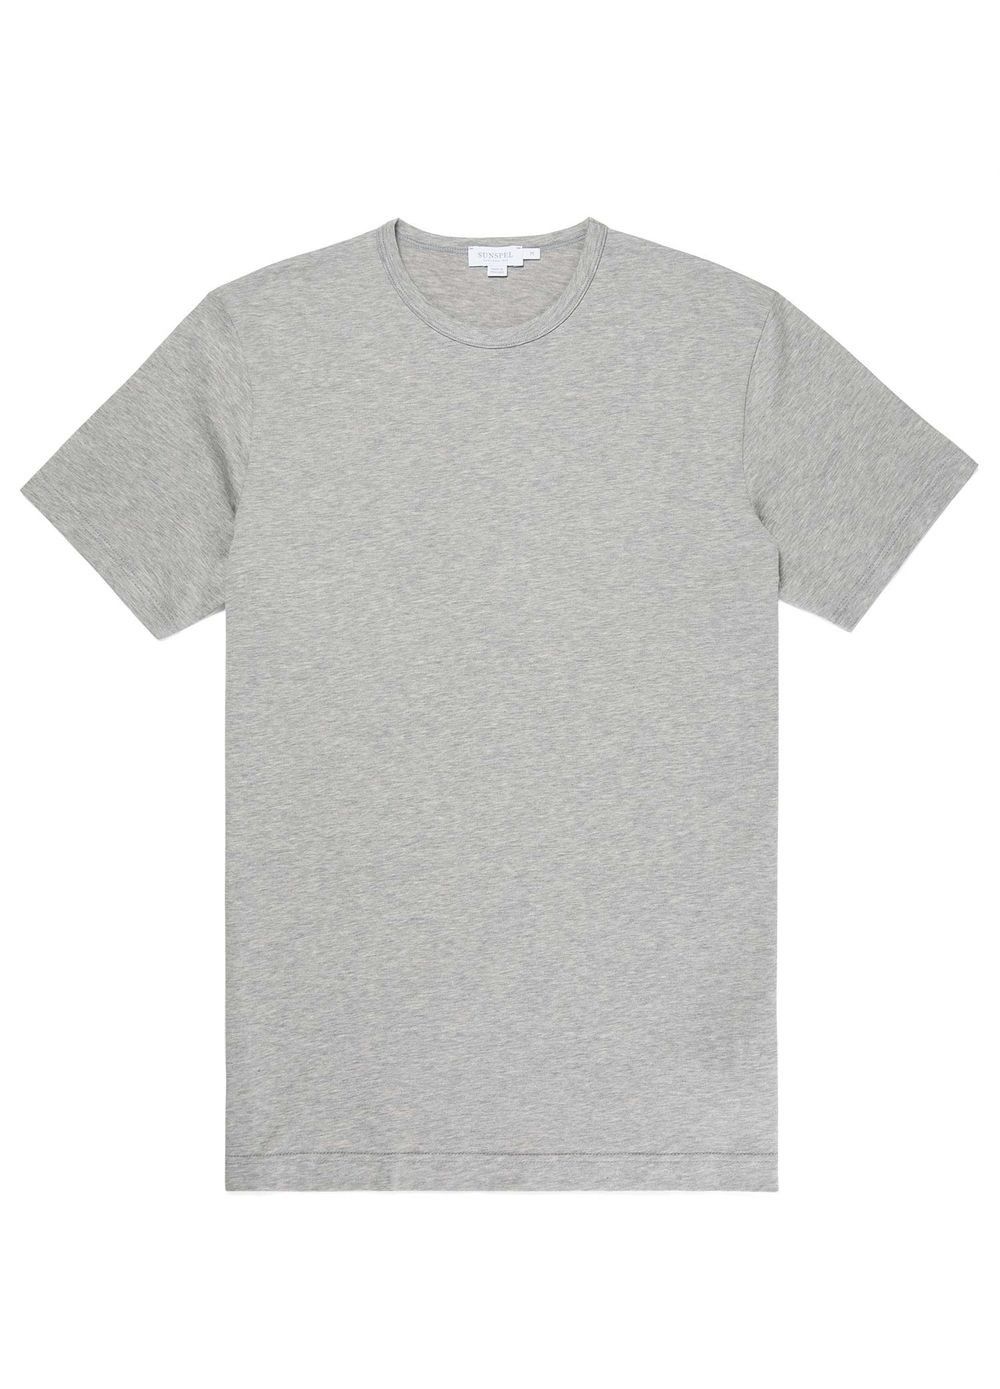 Sunspel Men's Classic Cotton T-Shirt in Grey Melange